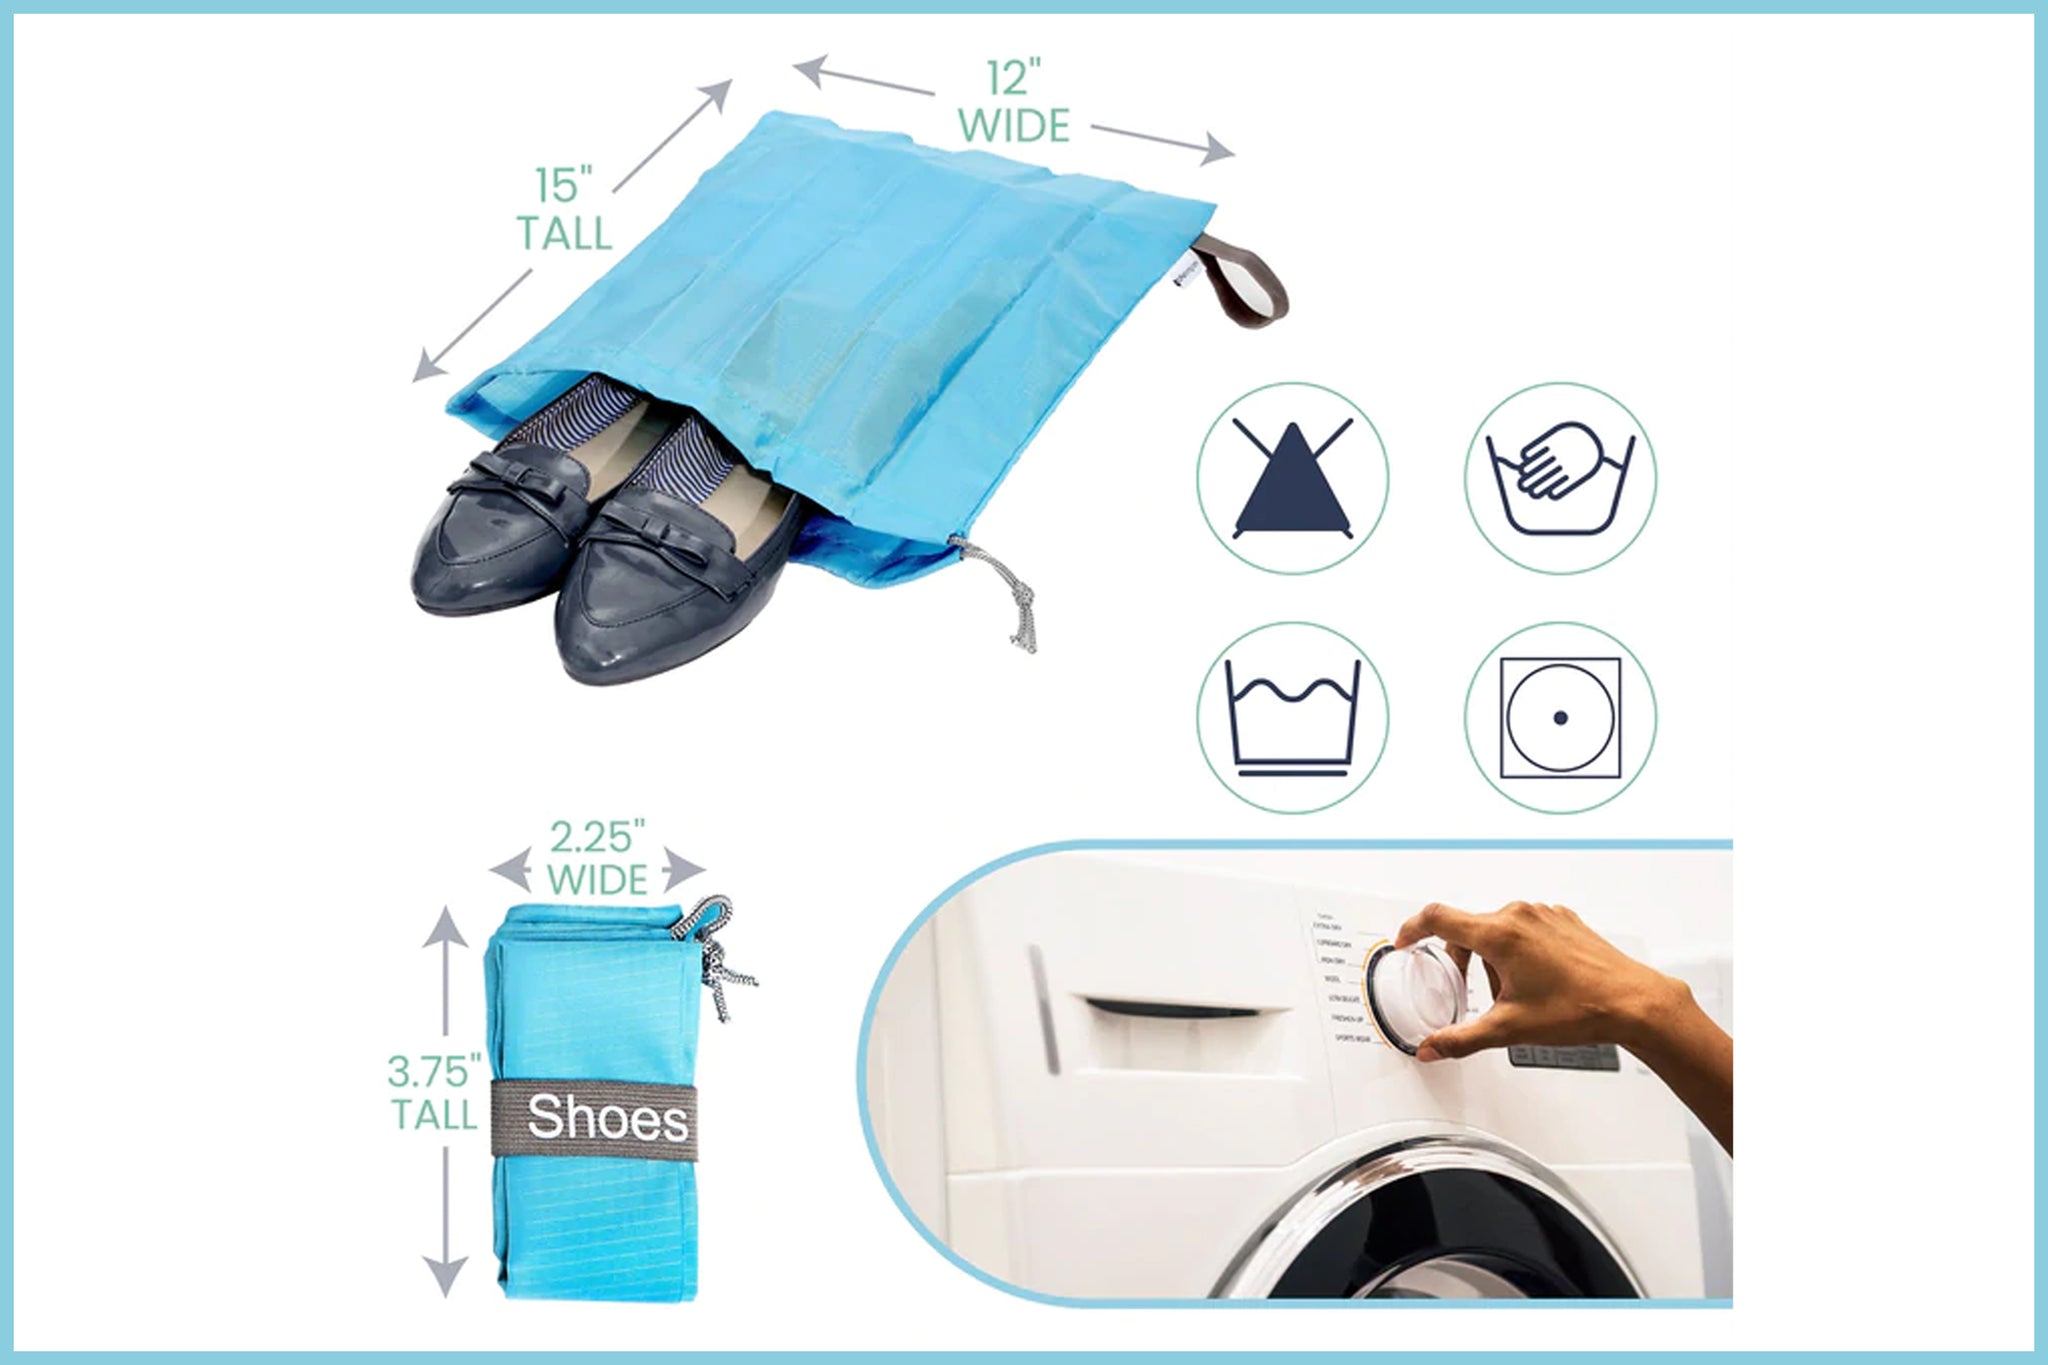  EzPacking Travel Laundry Bag with Drawstring/Foldable